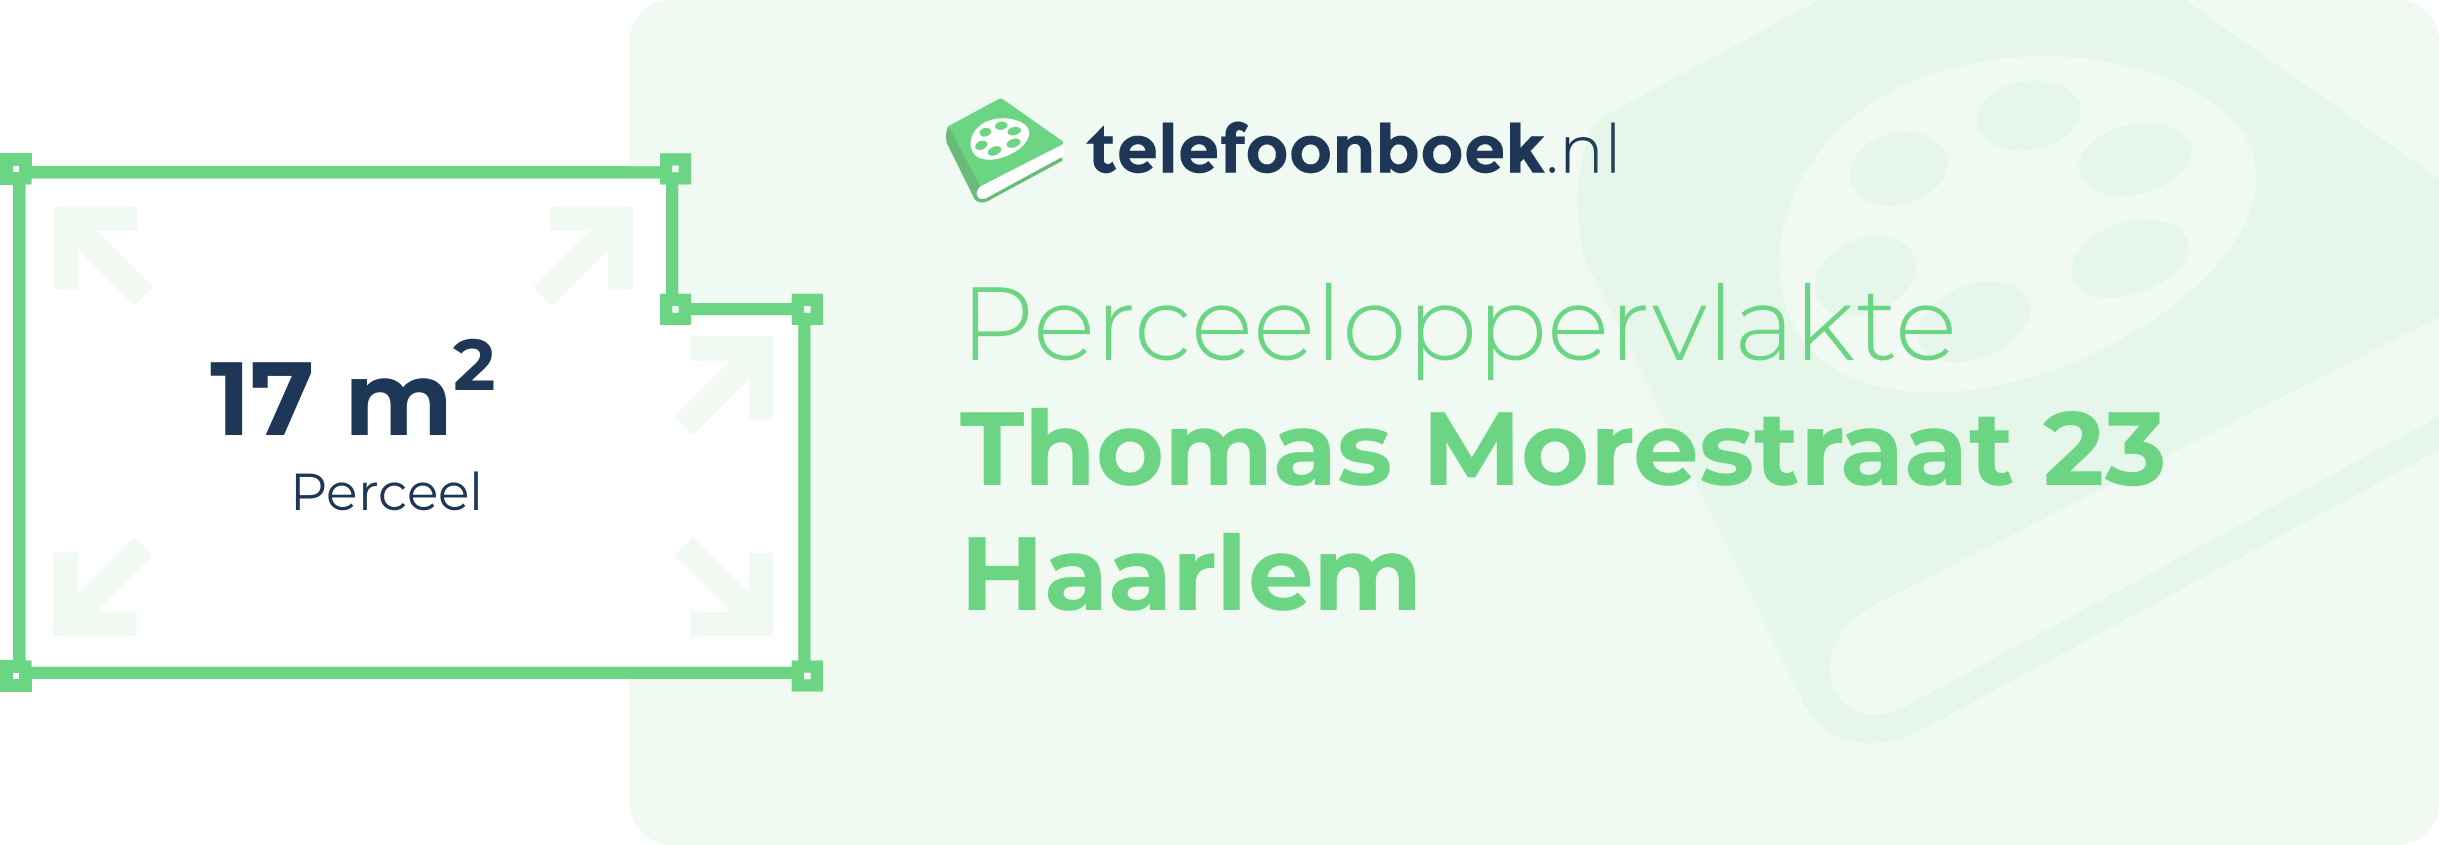 Perceeloppervlakte Thomas Morestraat 23 Haarlem